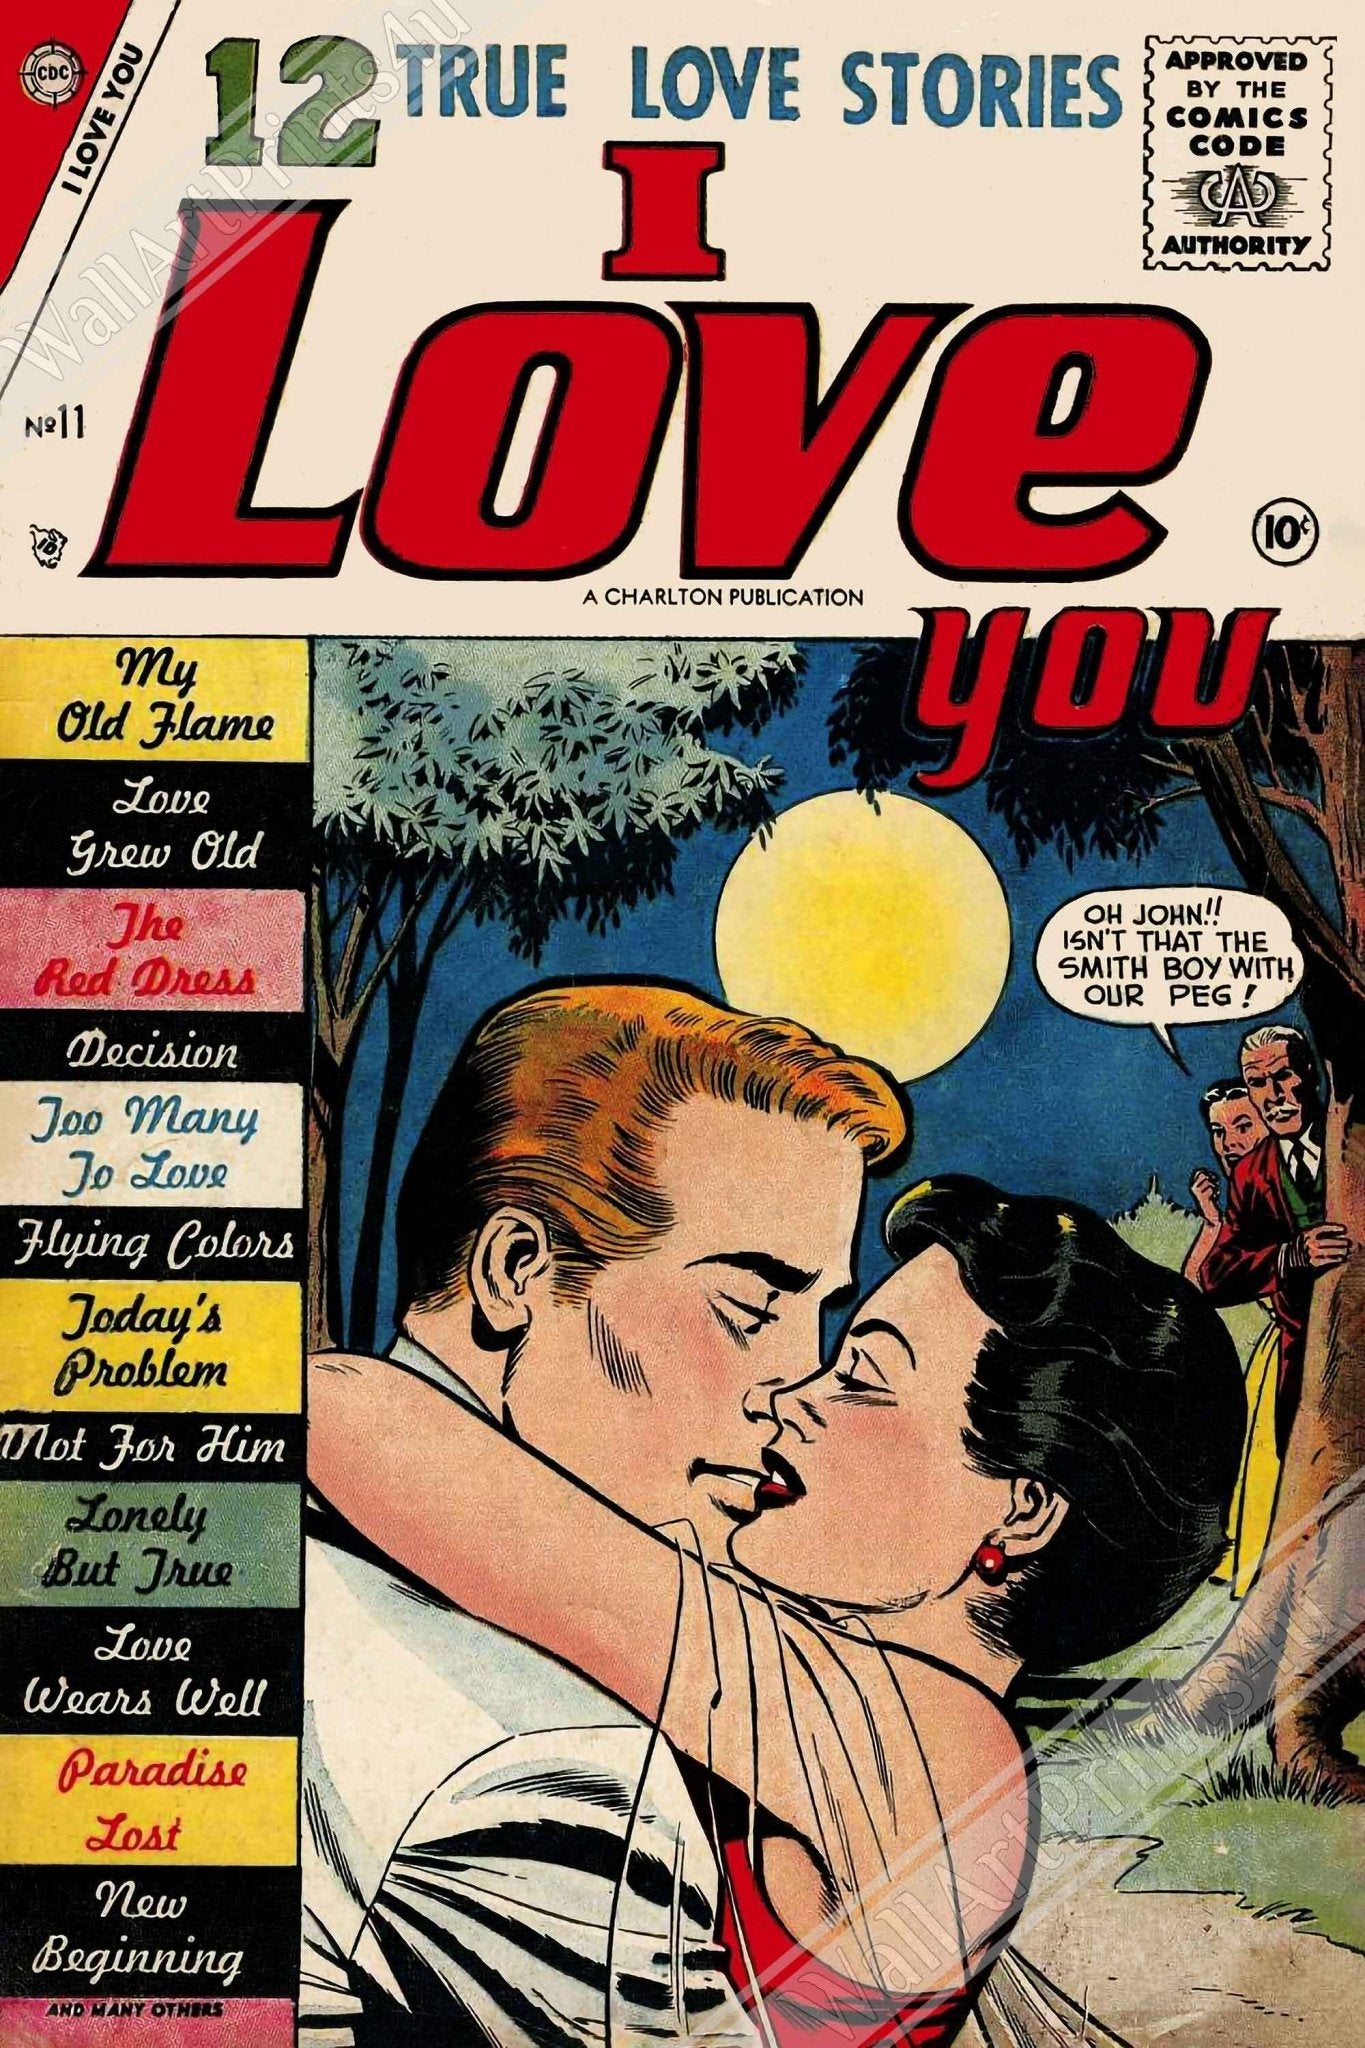 I Love You Poster Print Comic Strip Vintage Valentine Romance Poster From 1956 - WallArtPrints4U